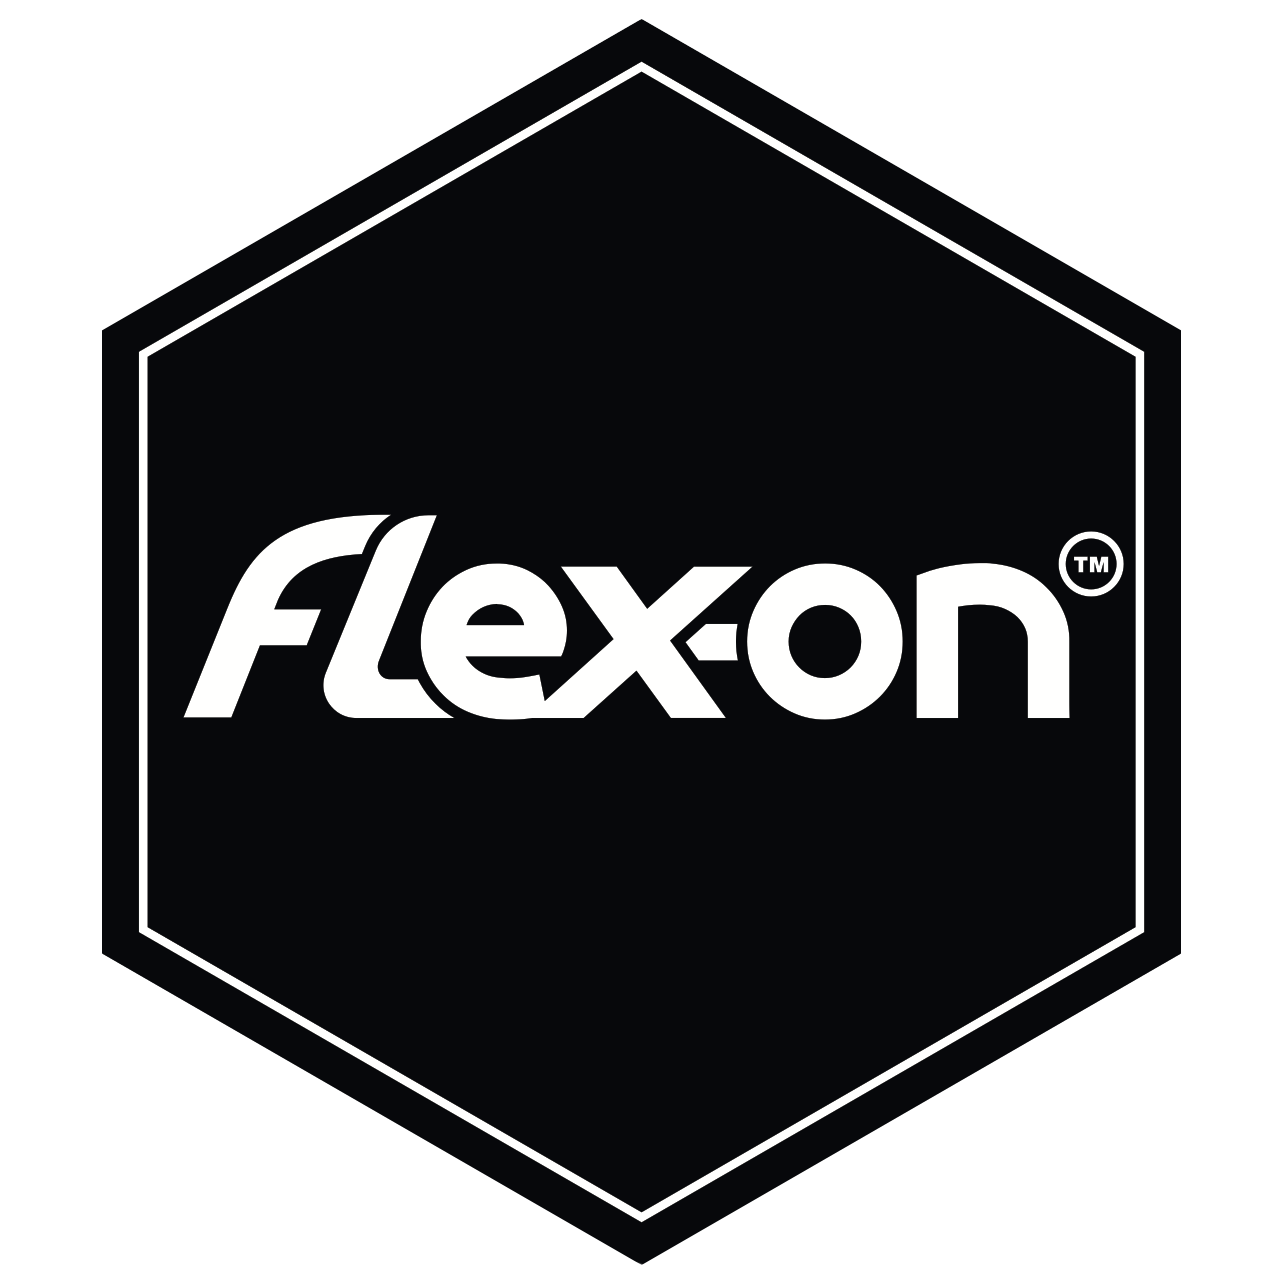 flexon.png